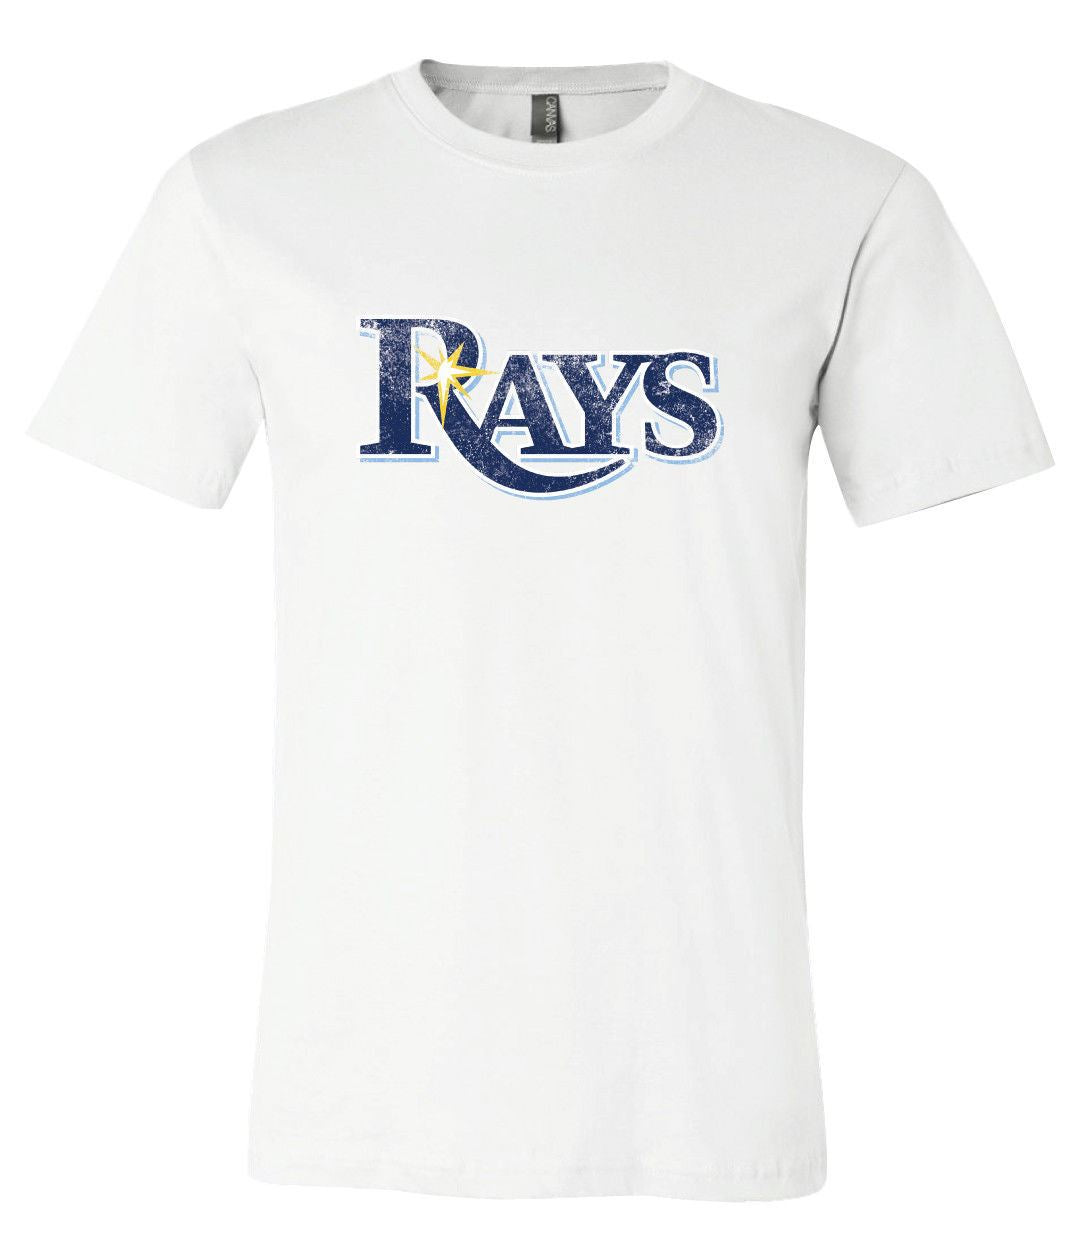 Tampa Bay Rays logo Distressed Vintage logo T-shirt 6 Sizes S-3XL!!